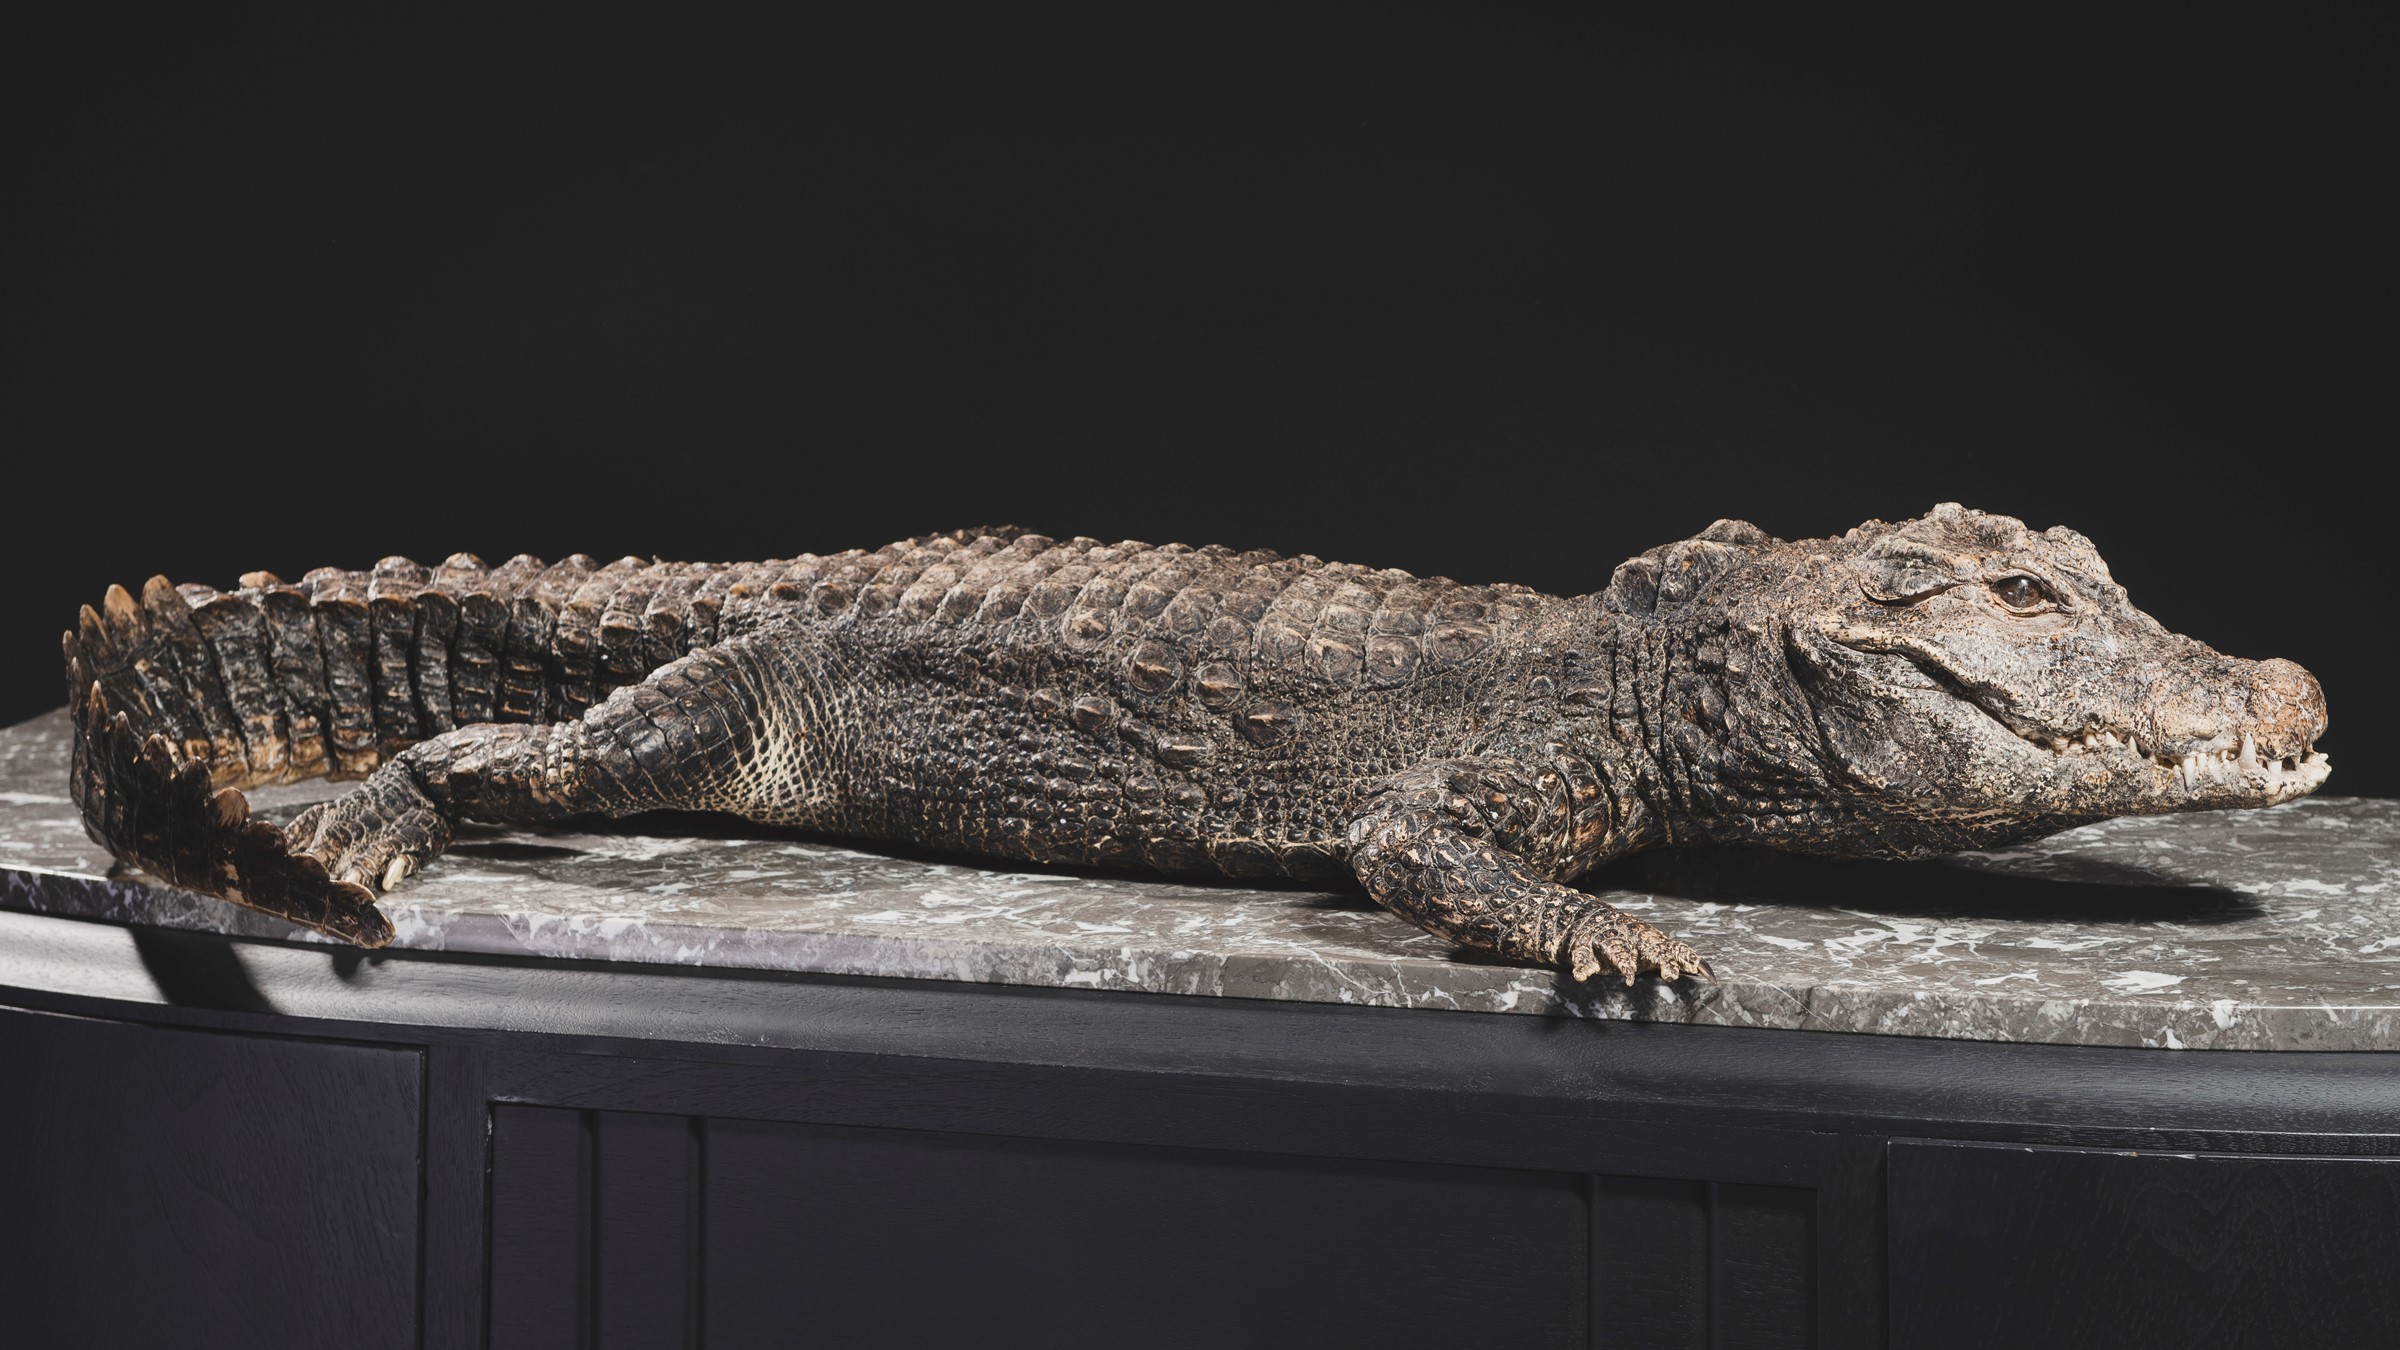 Dwarf crocodile taxidermy - cm 105x65x18. Osteolaemus tetraspis I/A certificate [...]